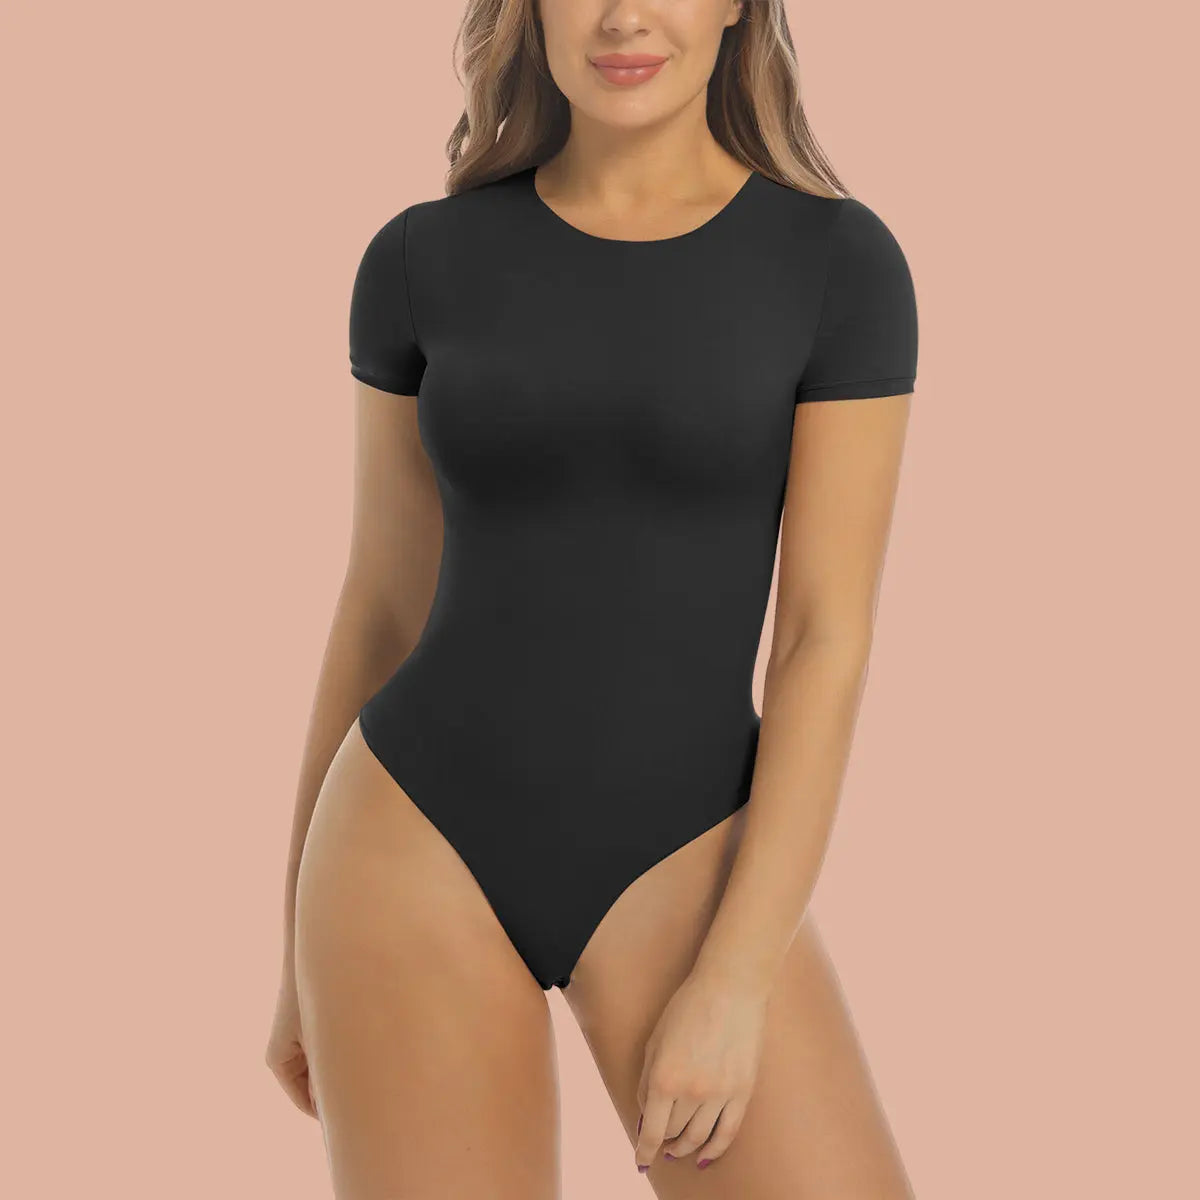 Thong Bodysuit for Women Tummy Control Square Neck Short Sleeve